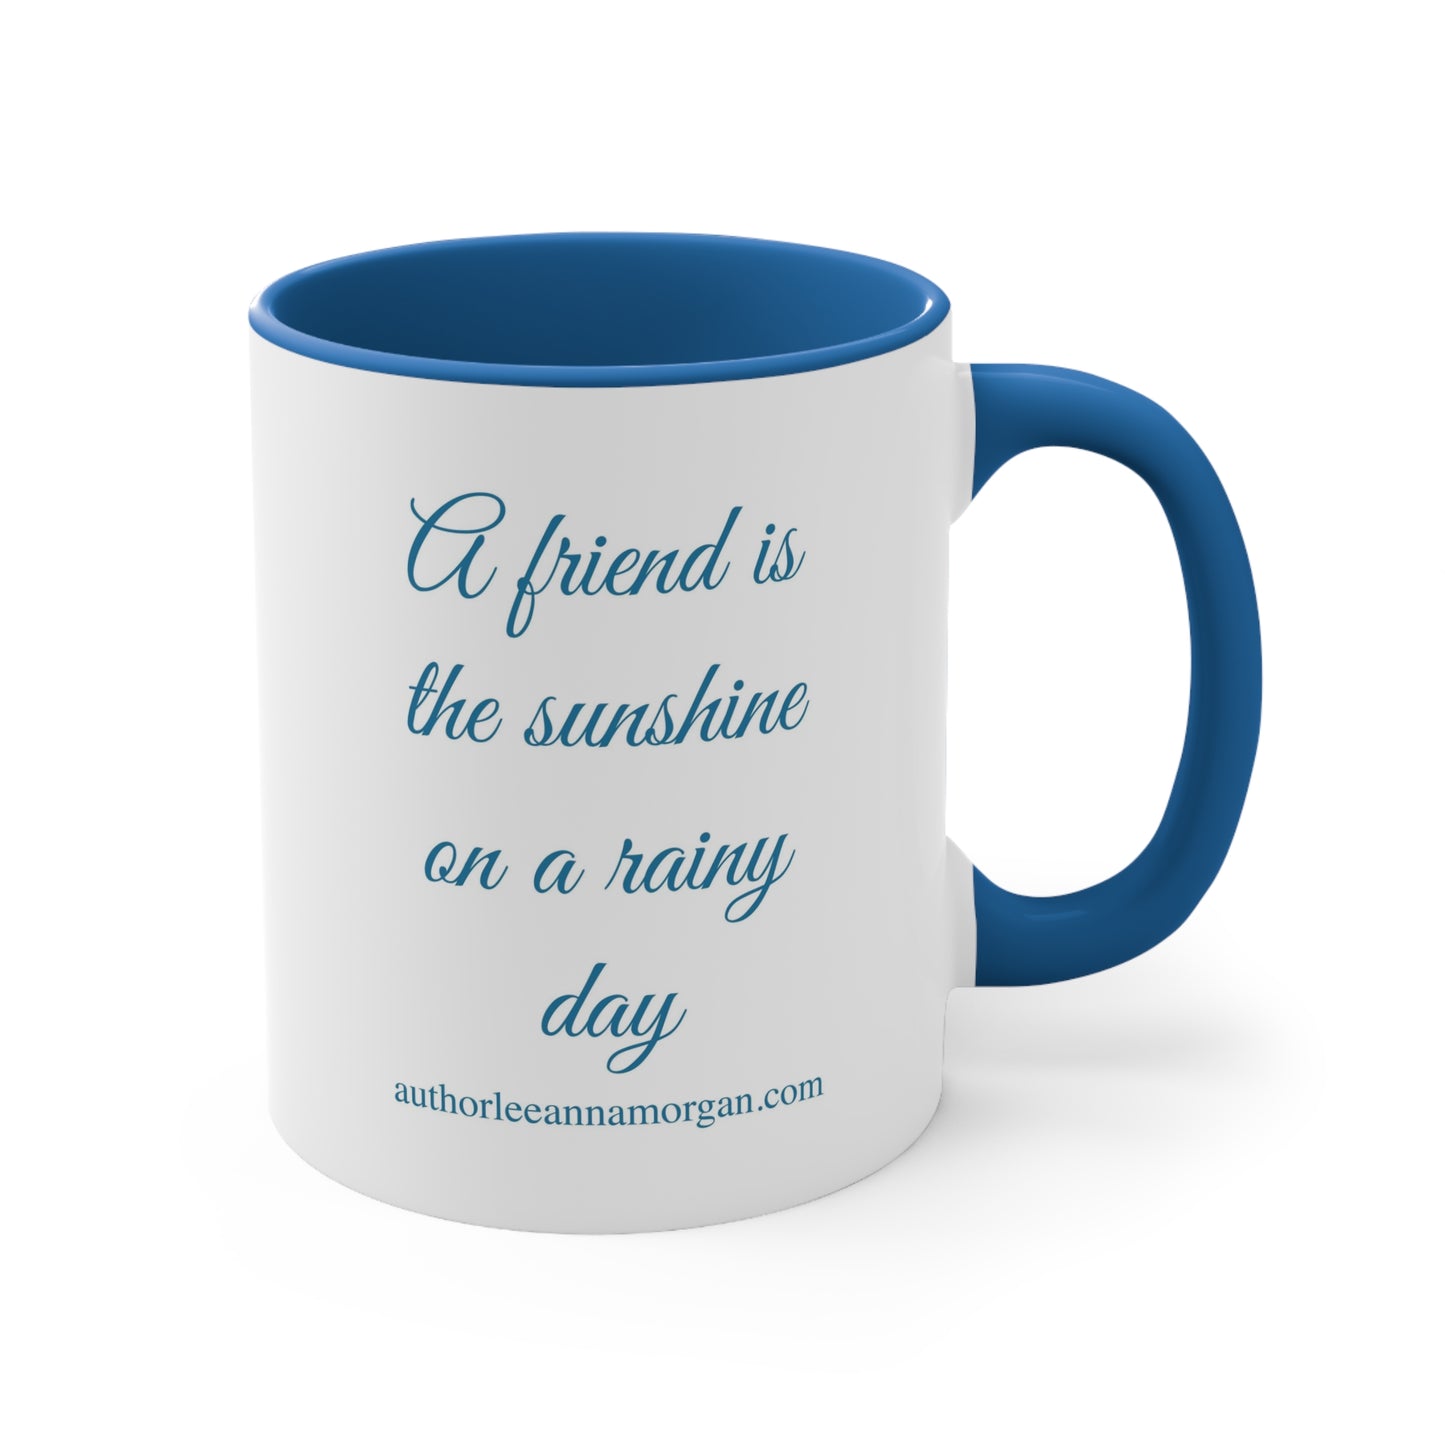 The Magic of Sunshine Coffee Mug - A friend is the sunshine on a rainy day